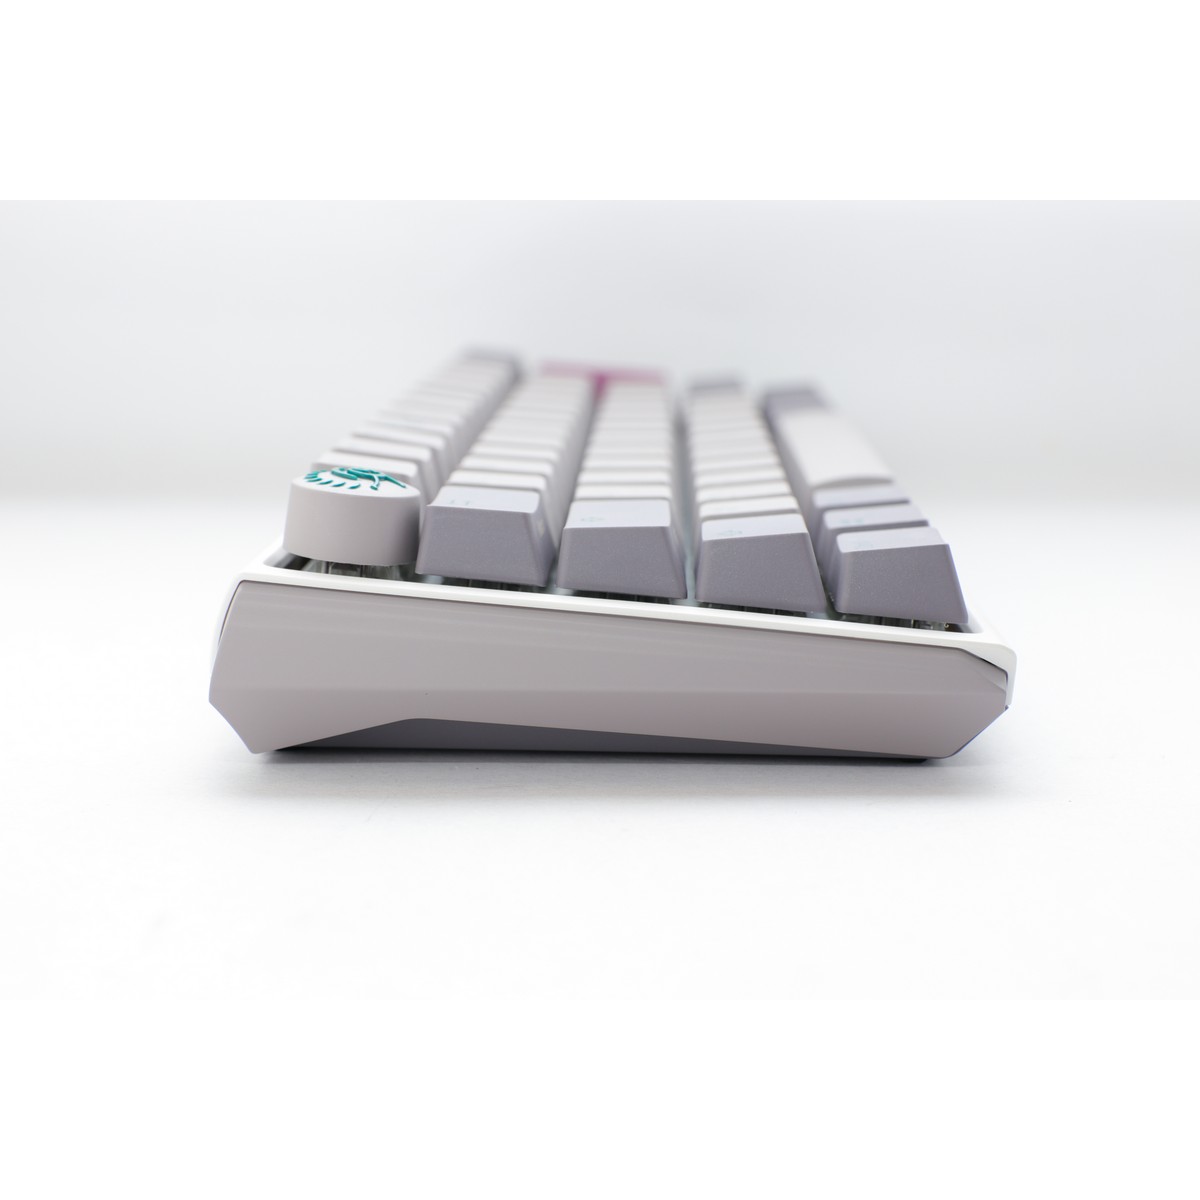 Ducky - Ducky One 3 Mist Mini 60% USB RGB Mechanical Gaming Keyboard Cherry MX Blue Switch - UK Layout